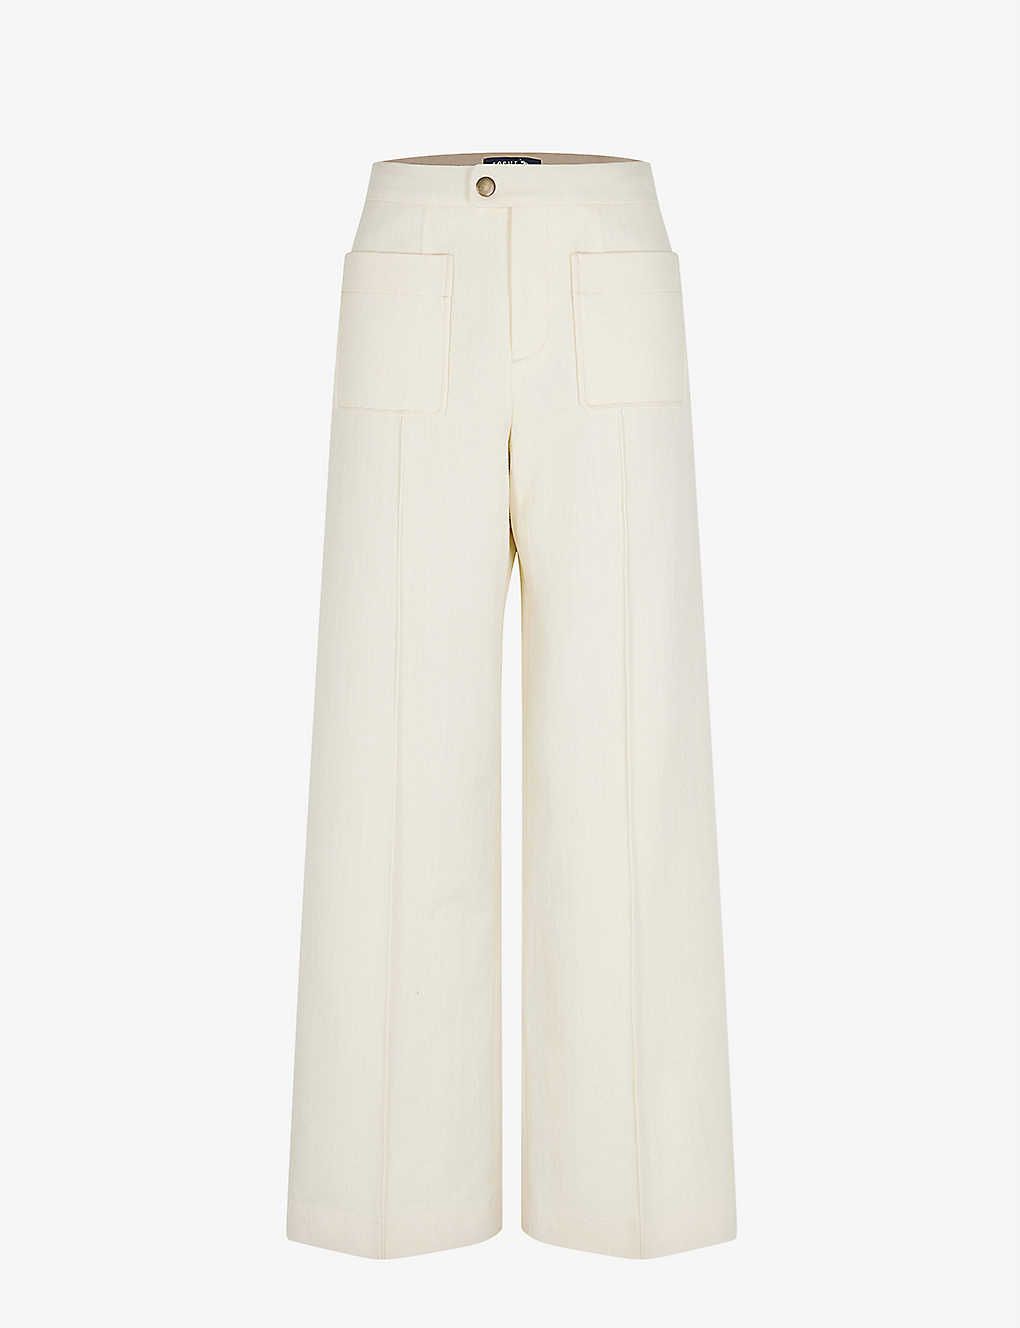 Harry twin-pocket cotton trousers | Selfridges